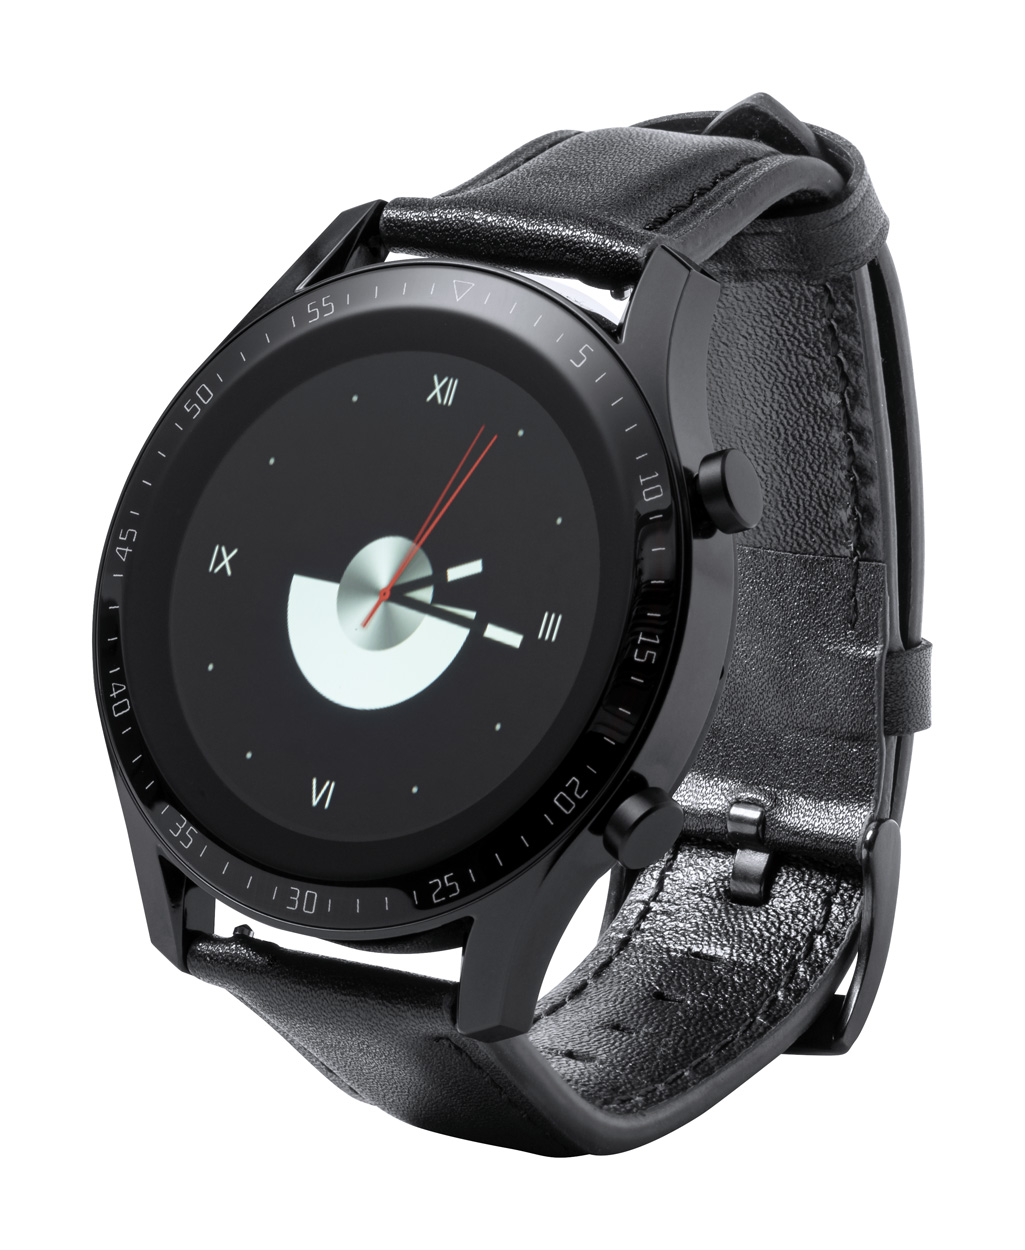 Daford smart watch - black